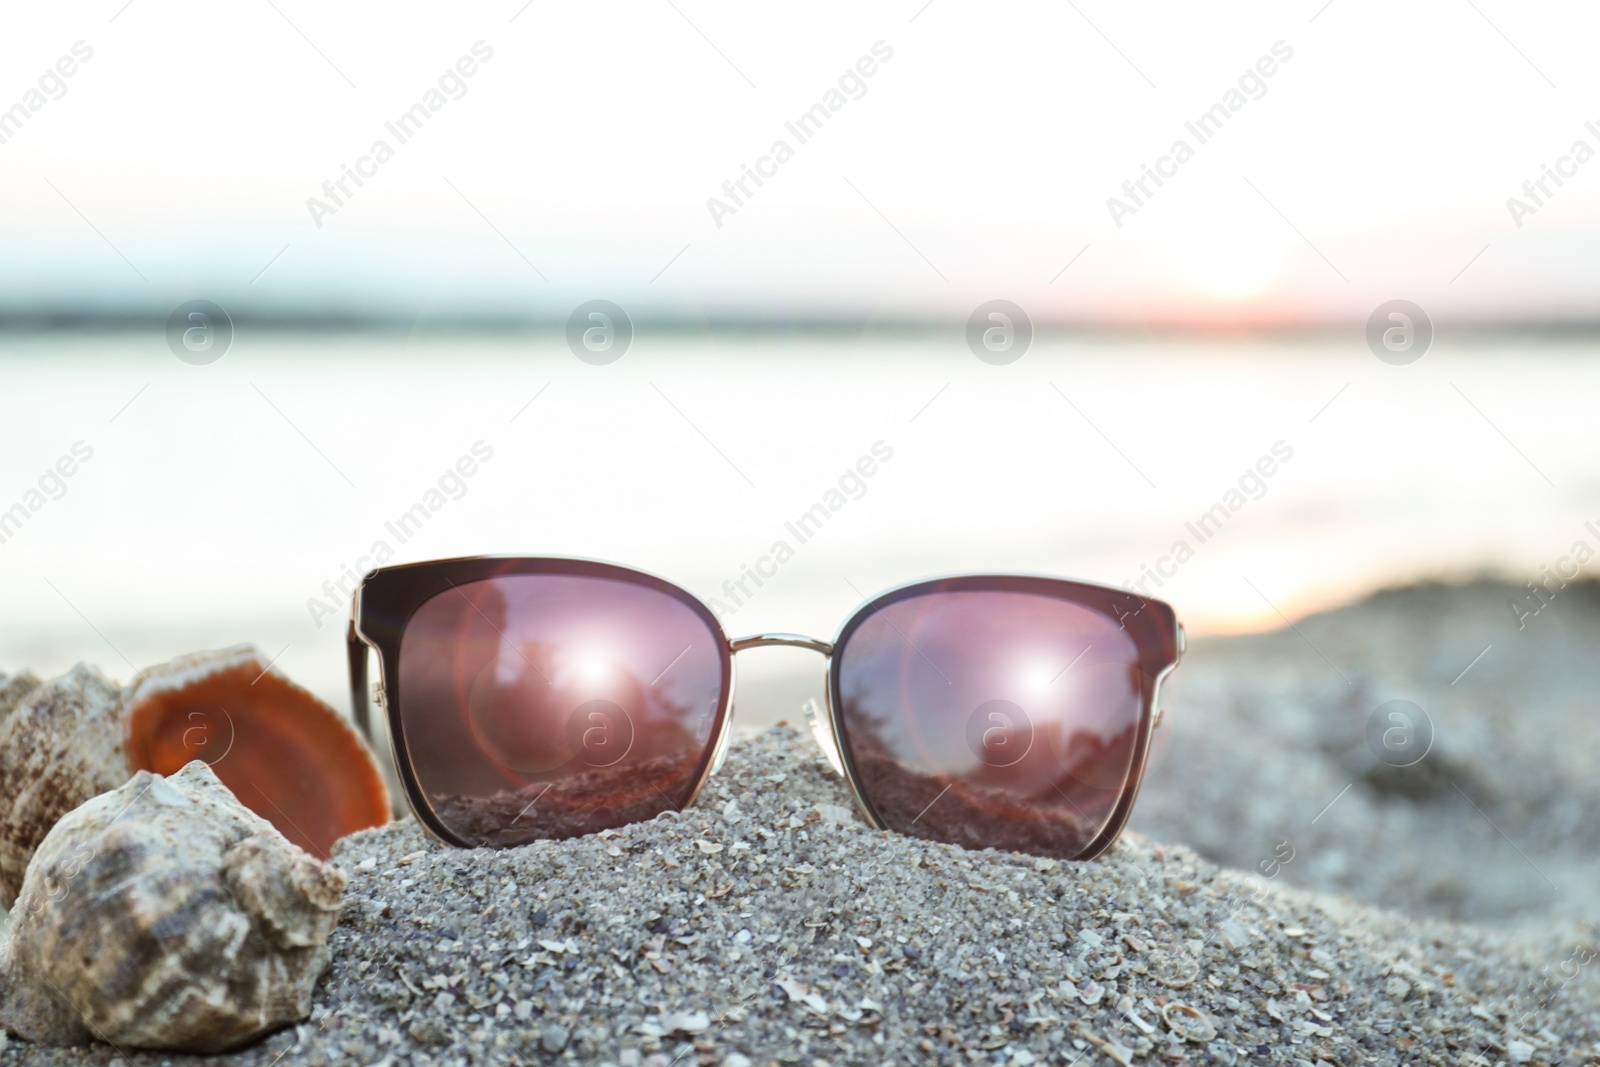 Photo of Stylish sunglasses and shell on sandy beach at sunset